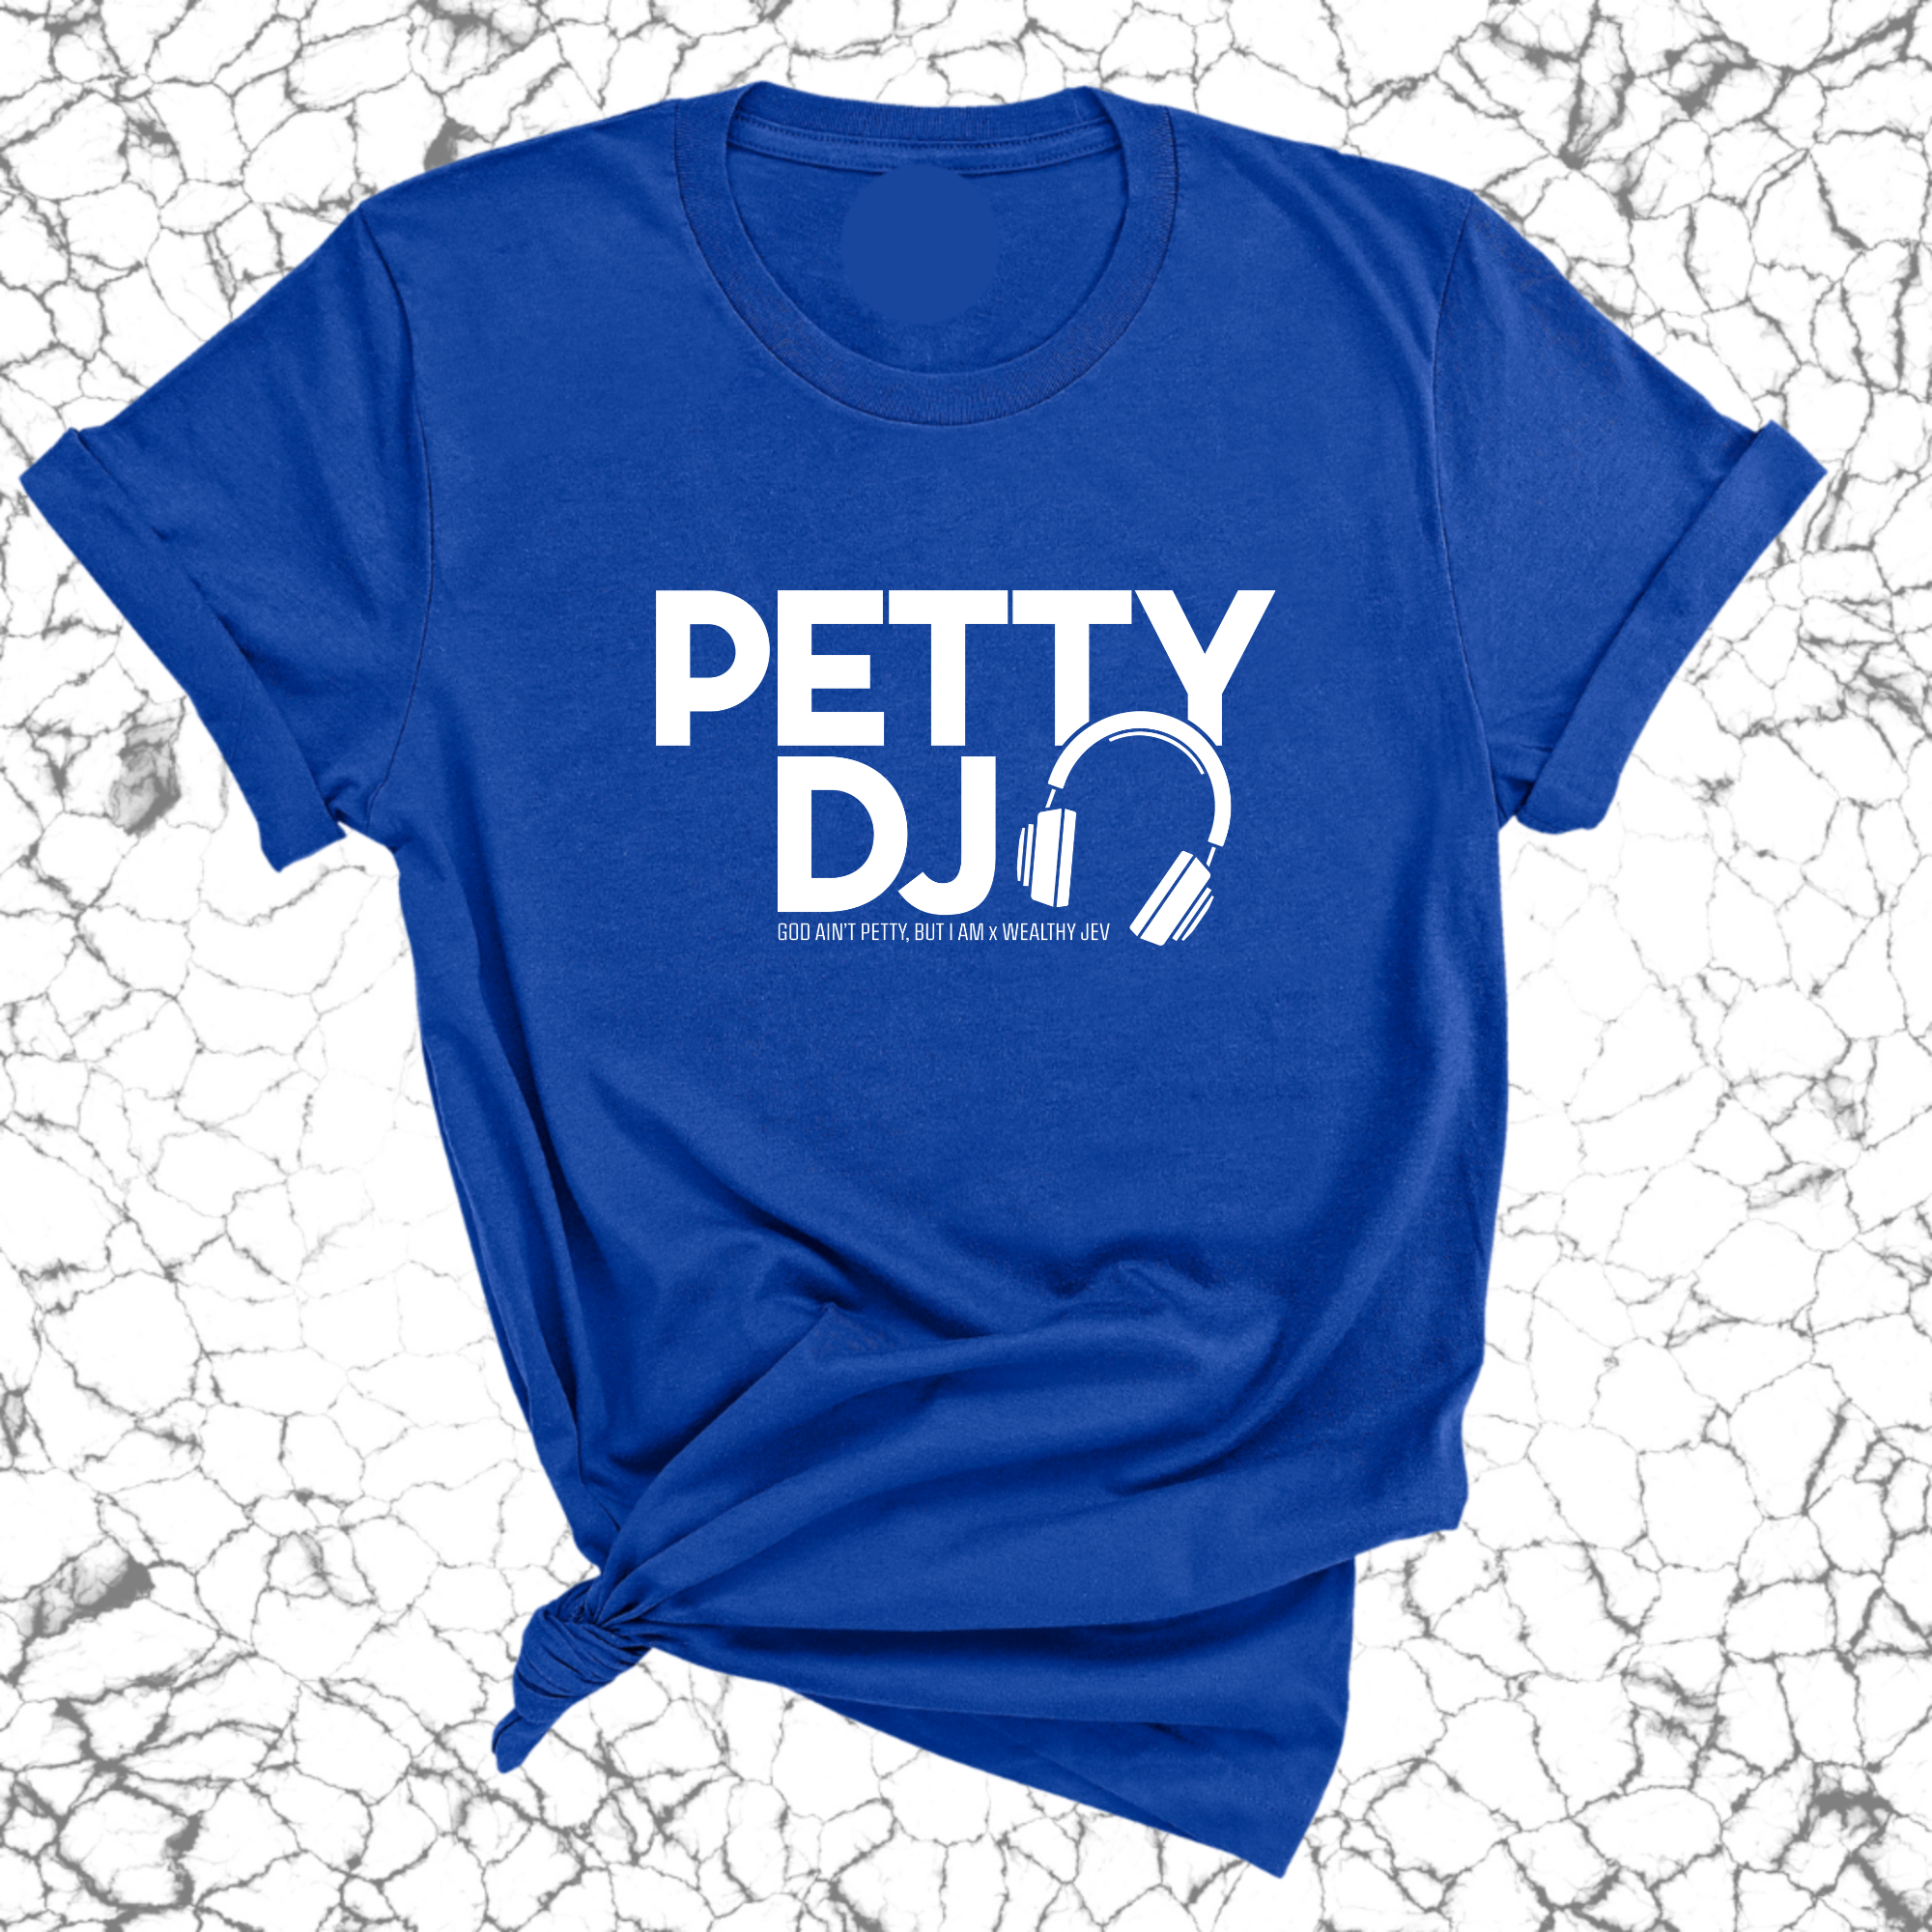 Petty DJ Unisex Tee (God Ain't Petty, but I Am x Wealthy Jev Collab)-T-Shirt-The Original God Ain't Petty But I Am